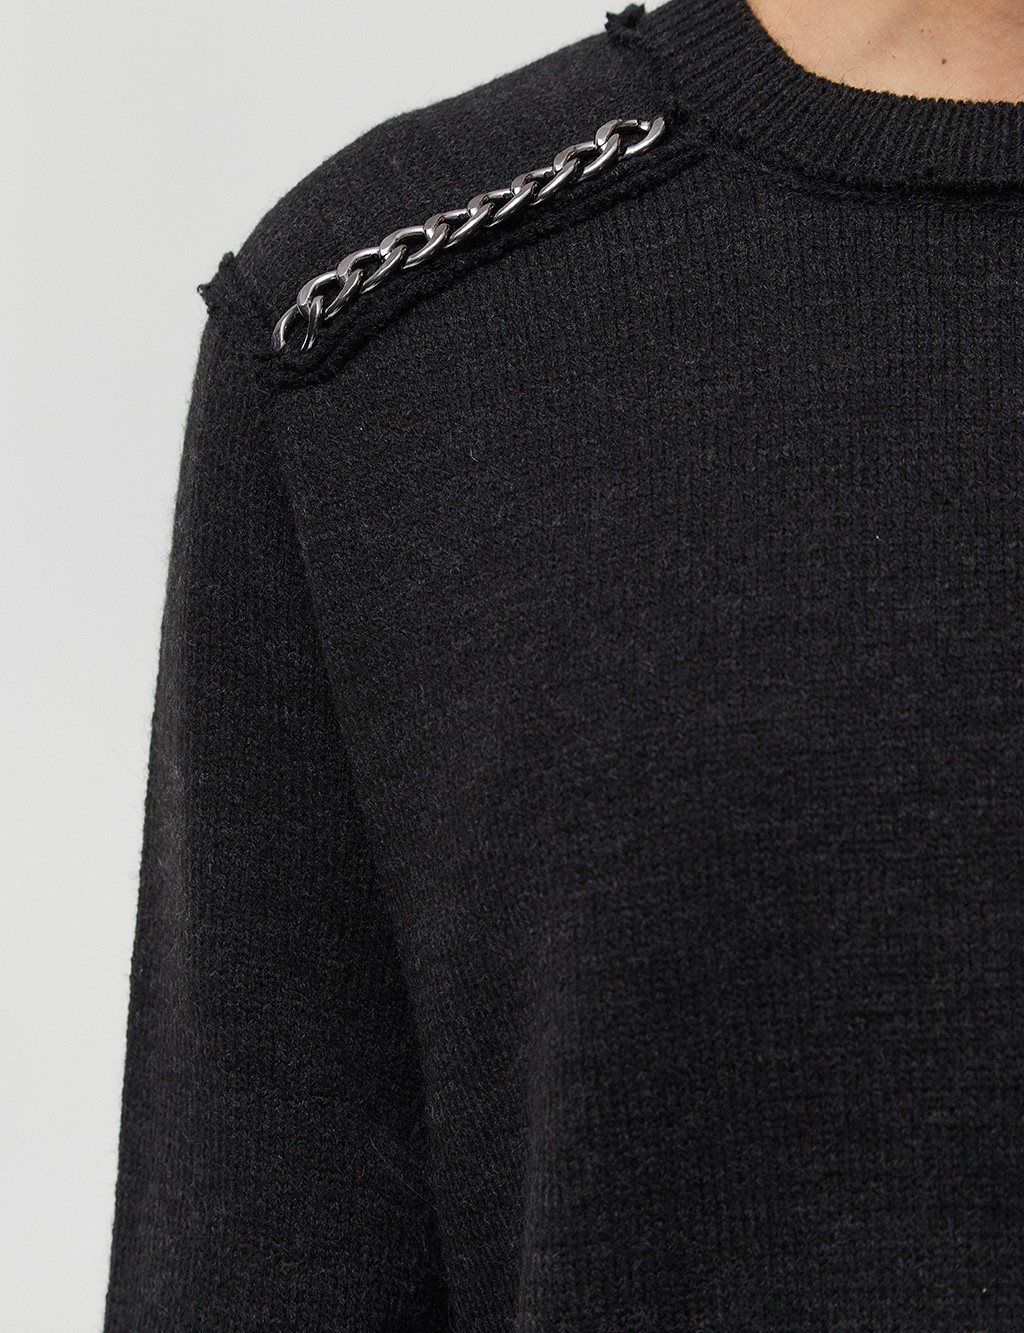 Chain Detailed Reverse Stitch Knitwear Tunic Black